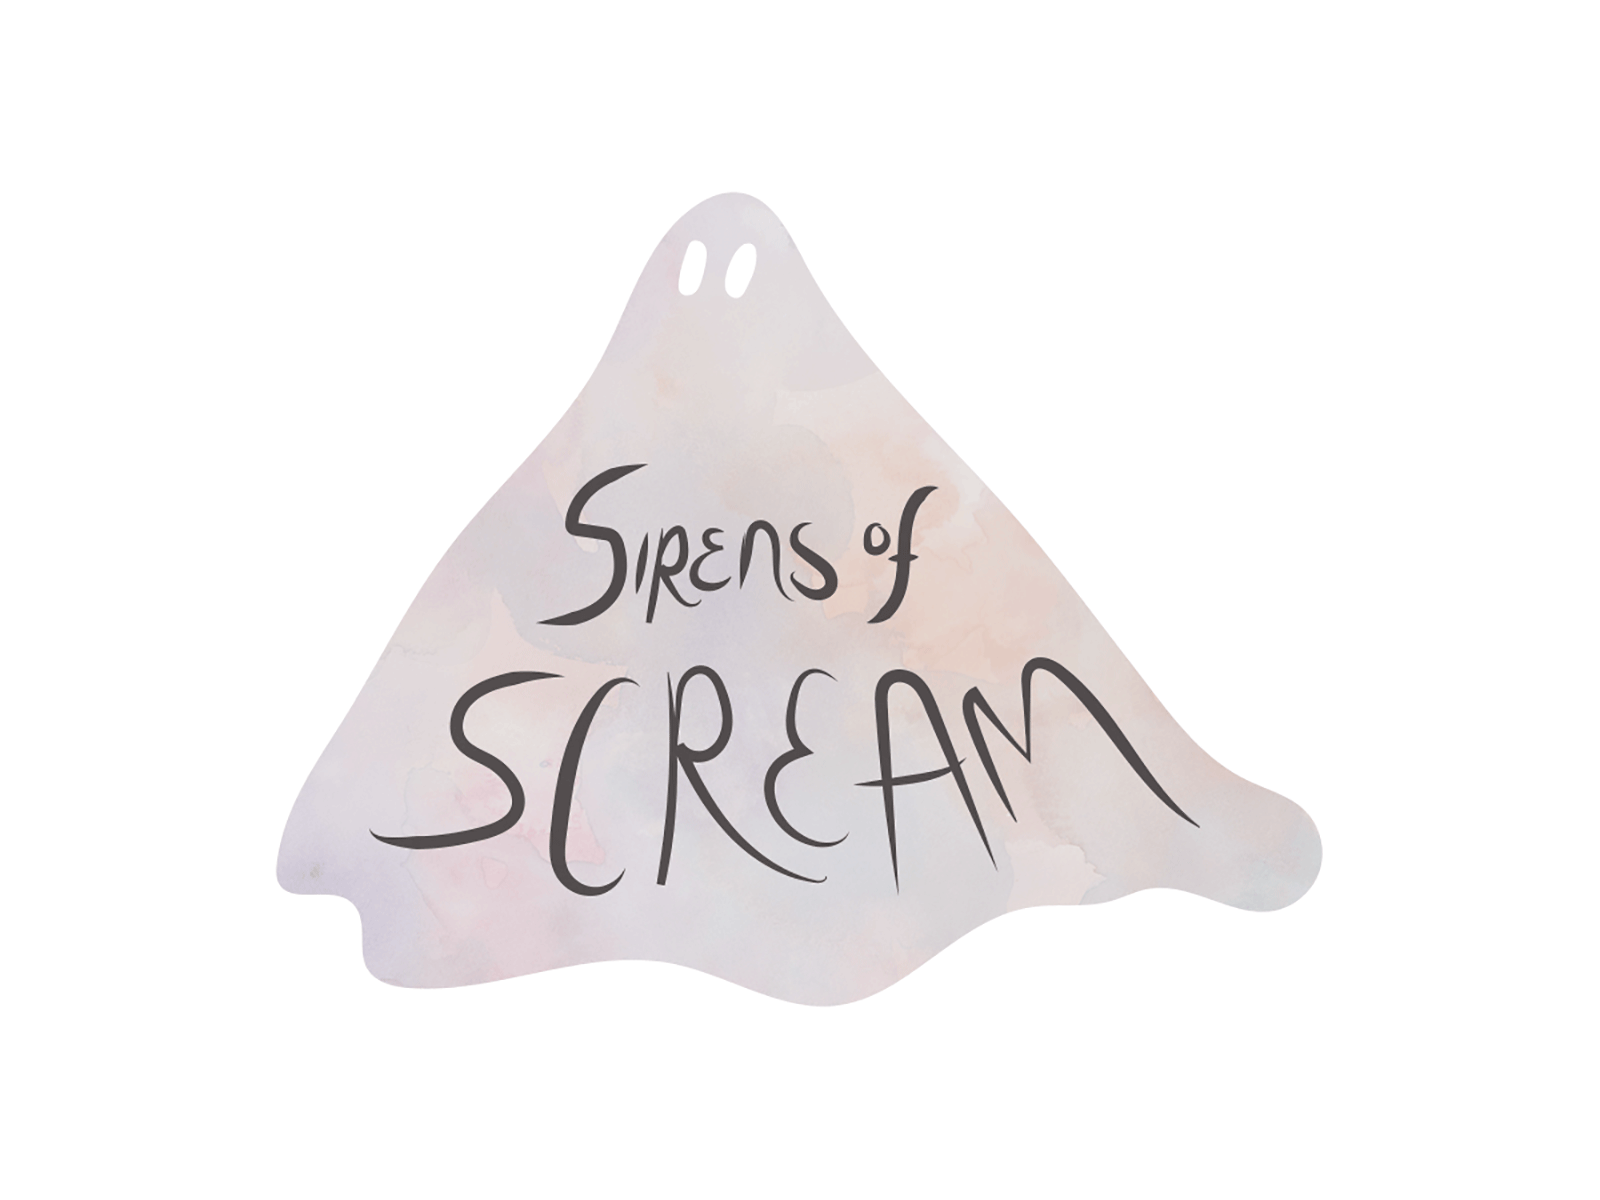 Sirens of Scream animated gif animation gif illustration motion graphics